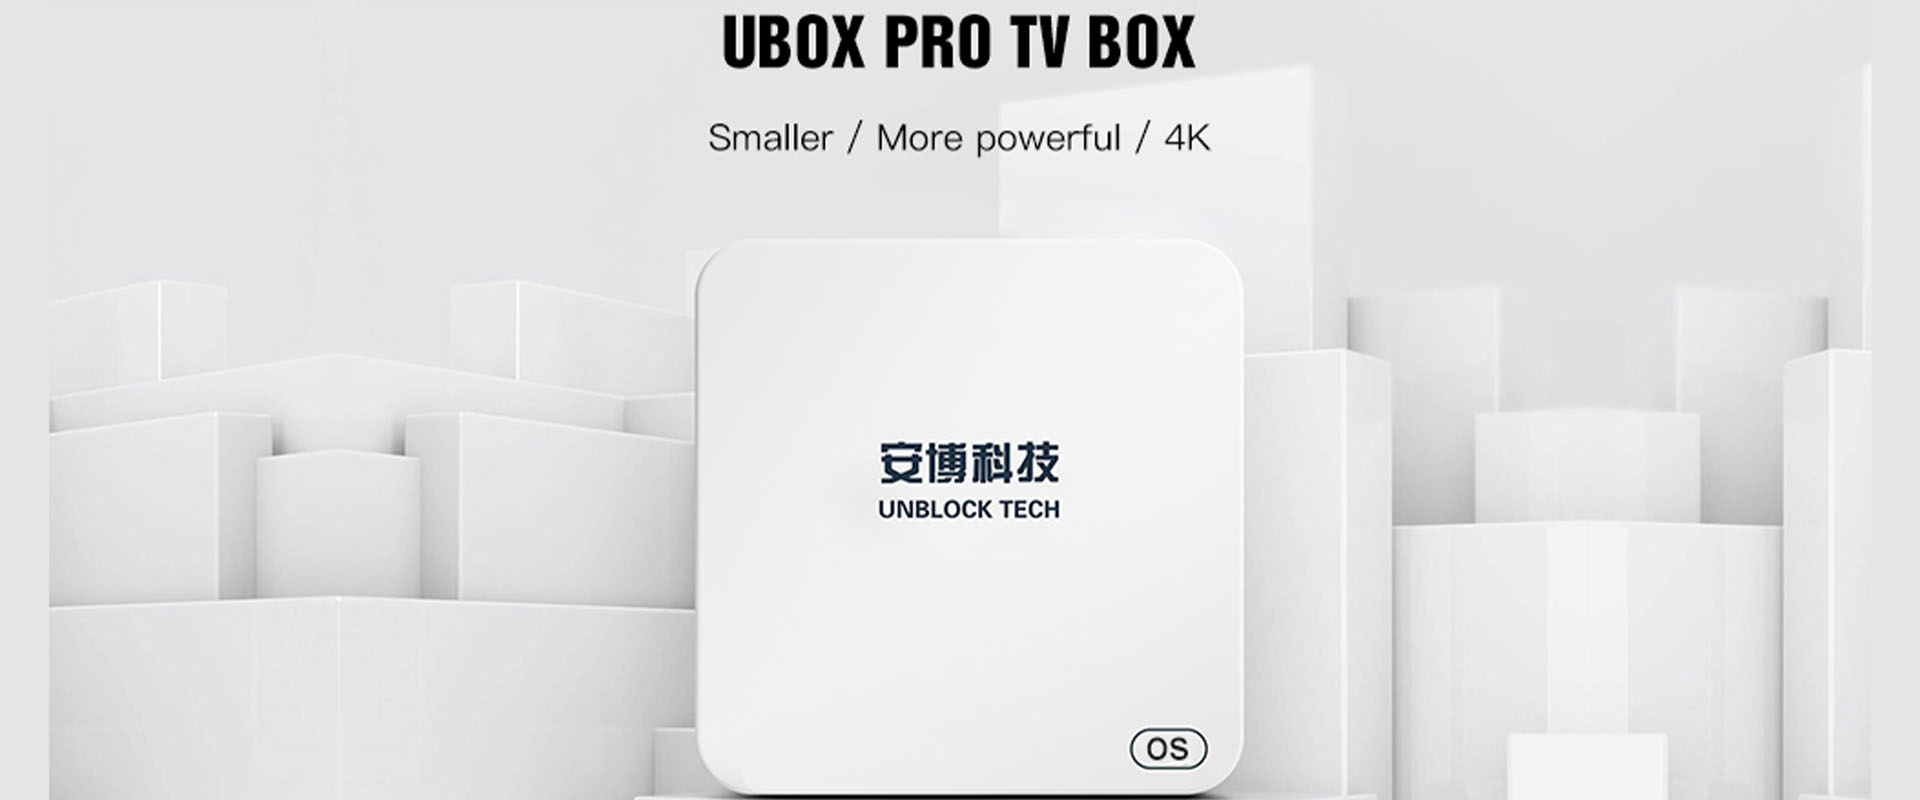 Ubox5 Pro TV Box - Unblock Tech Последняя версия UBOX Gen 5 Pro Max